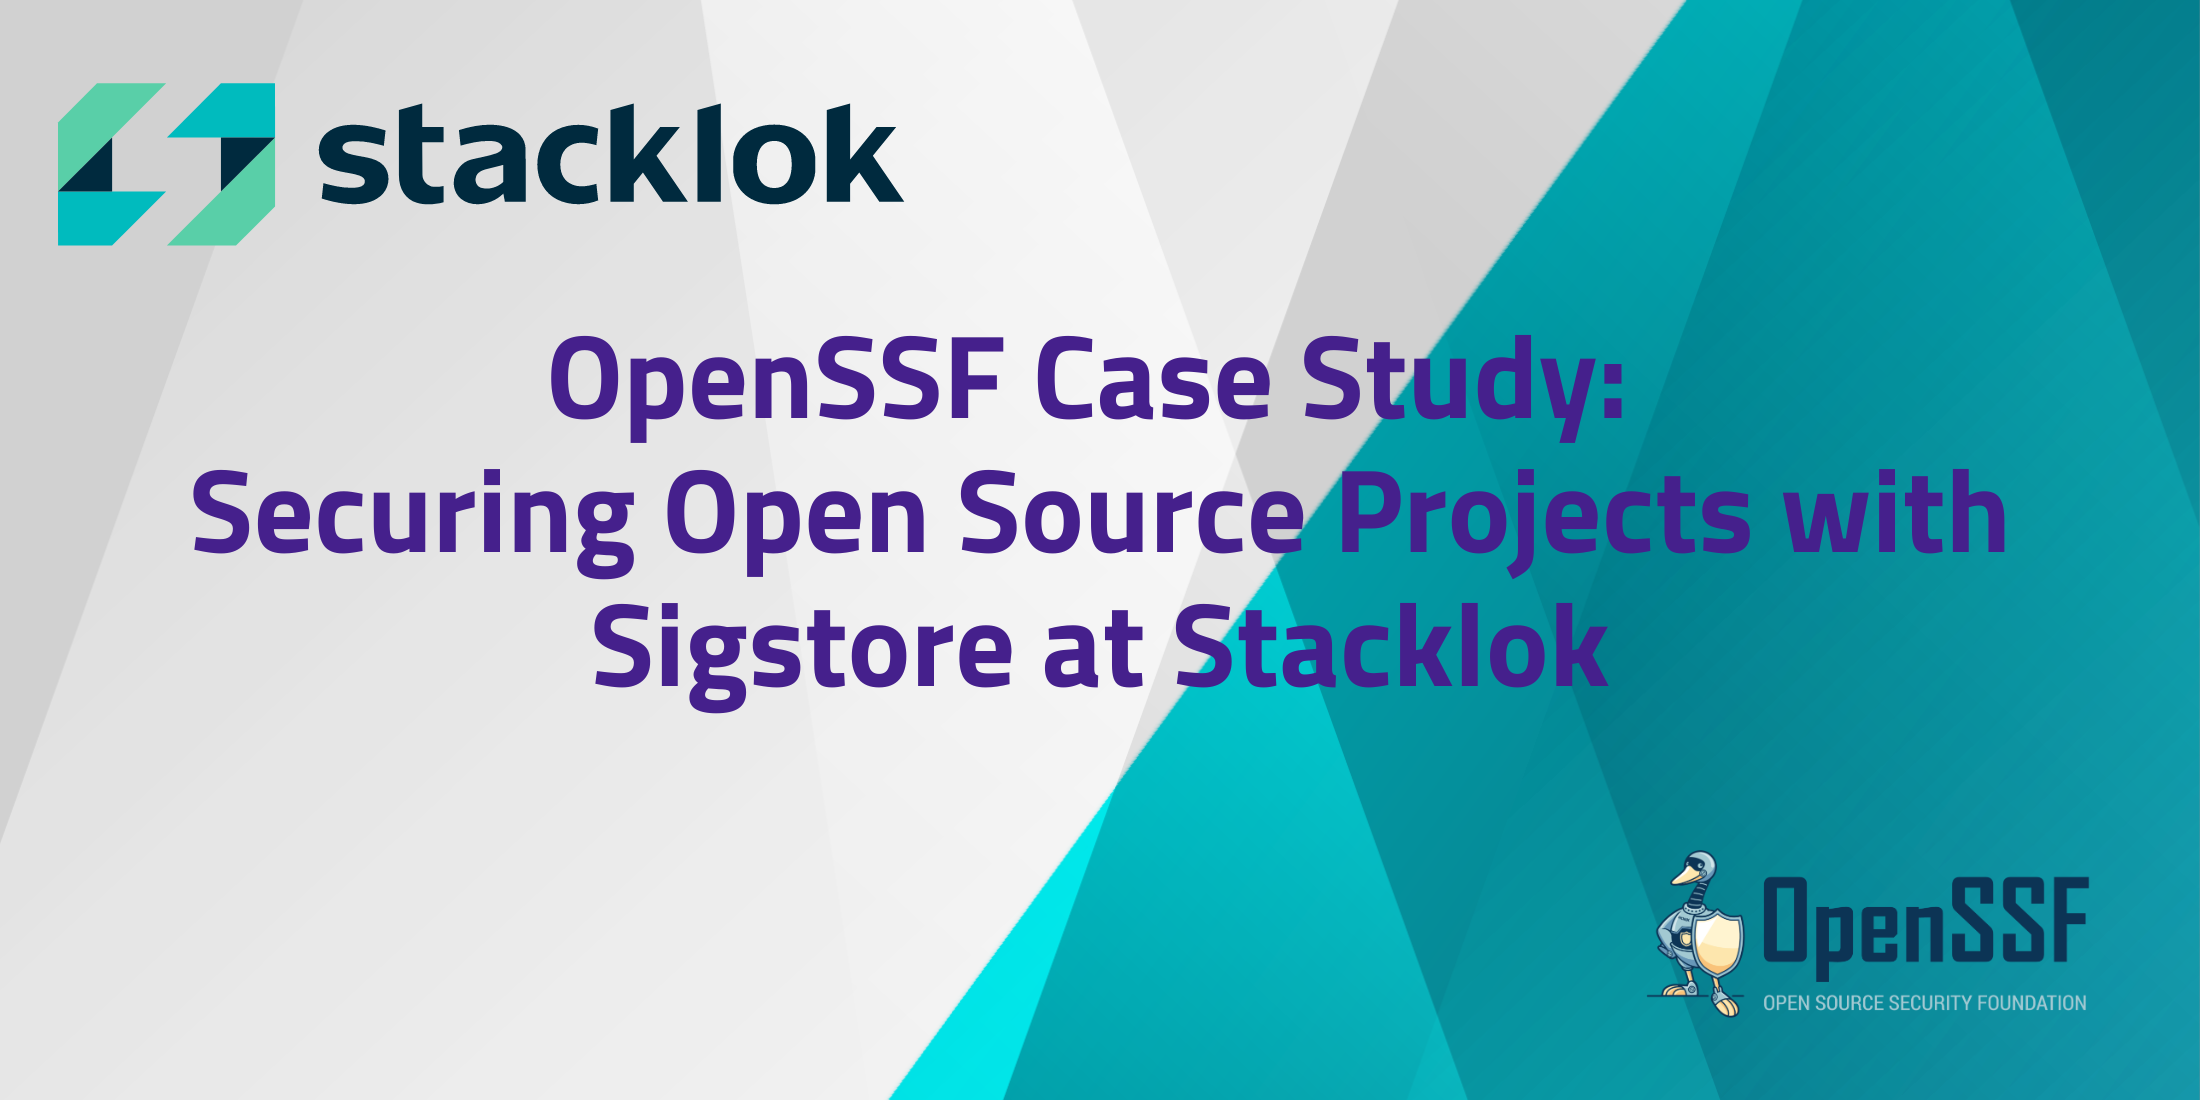 Stacklok Case Study